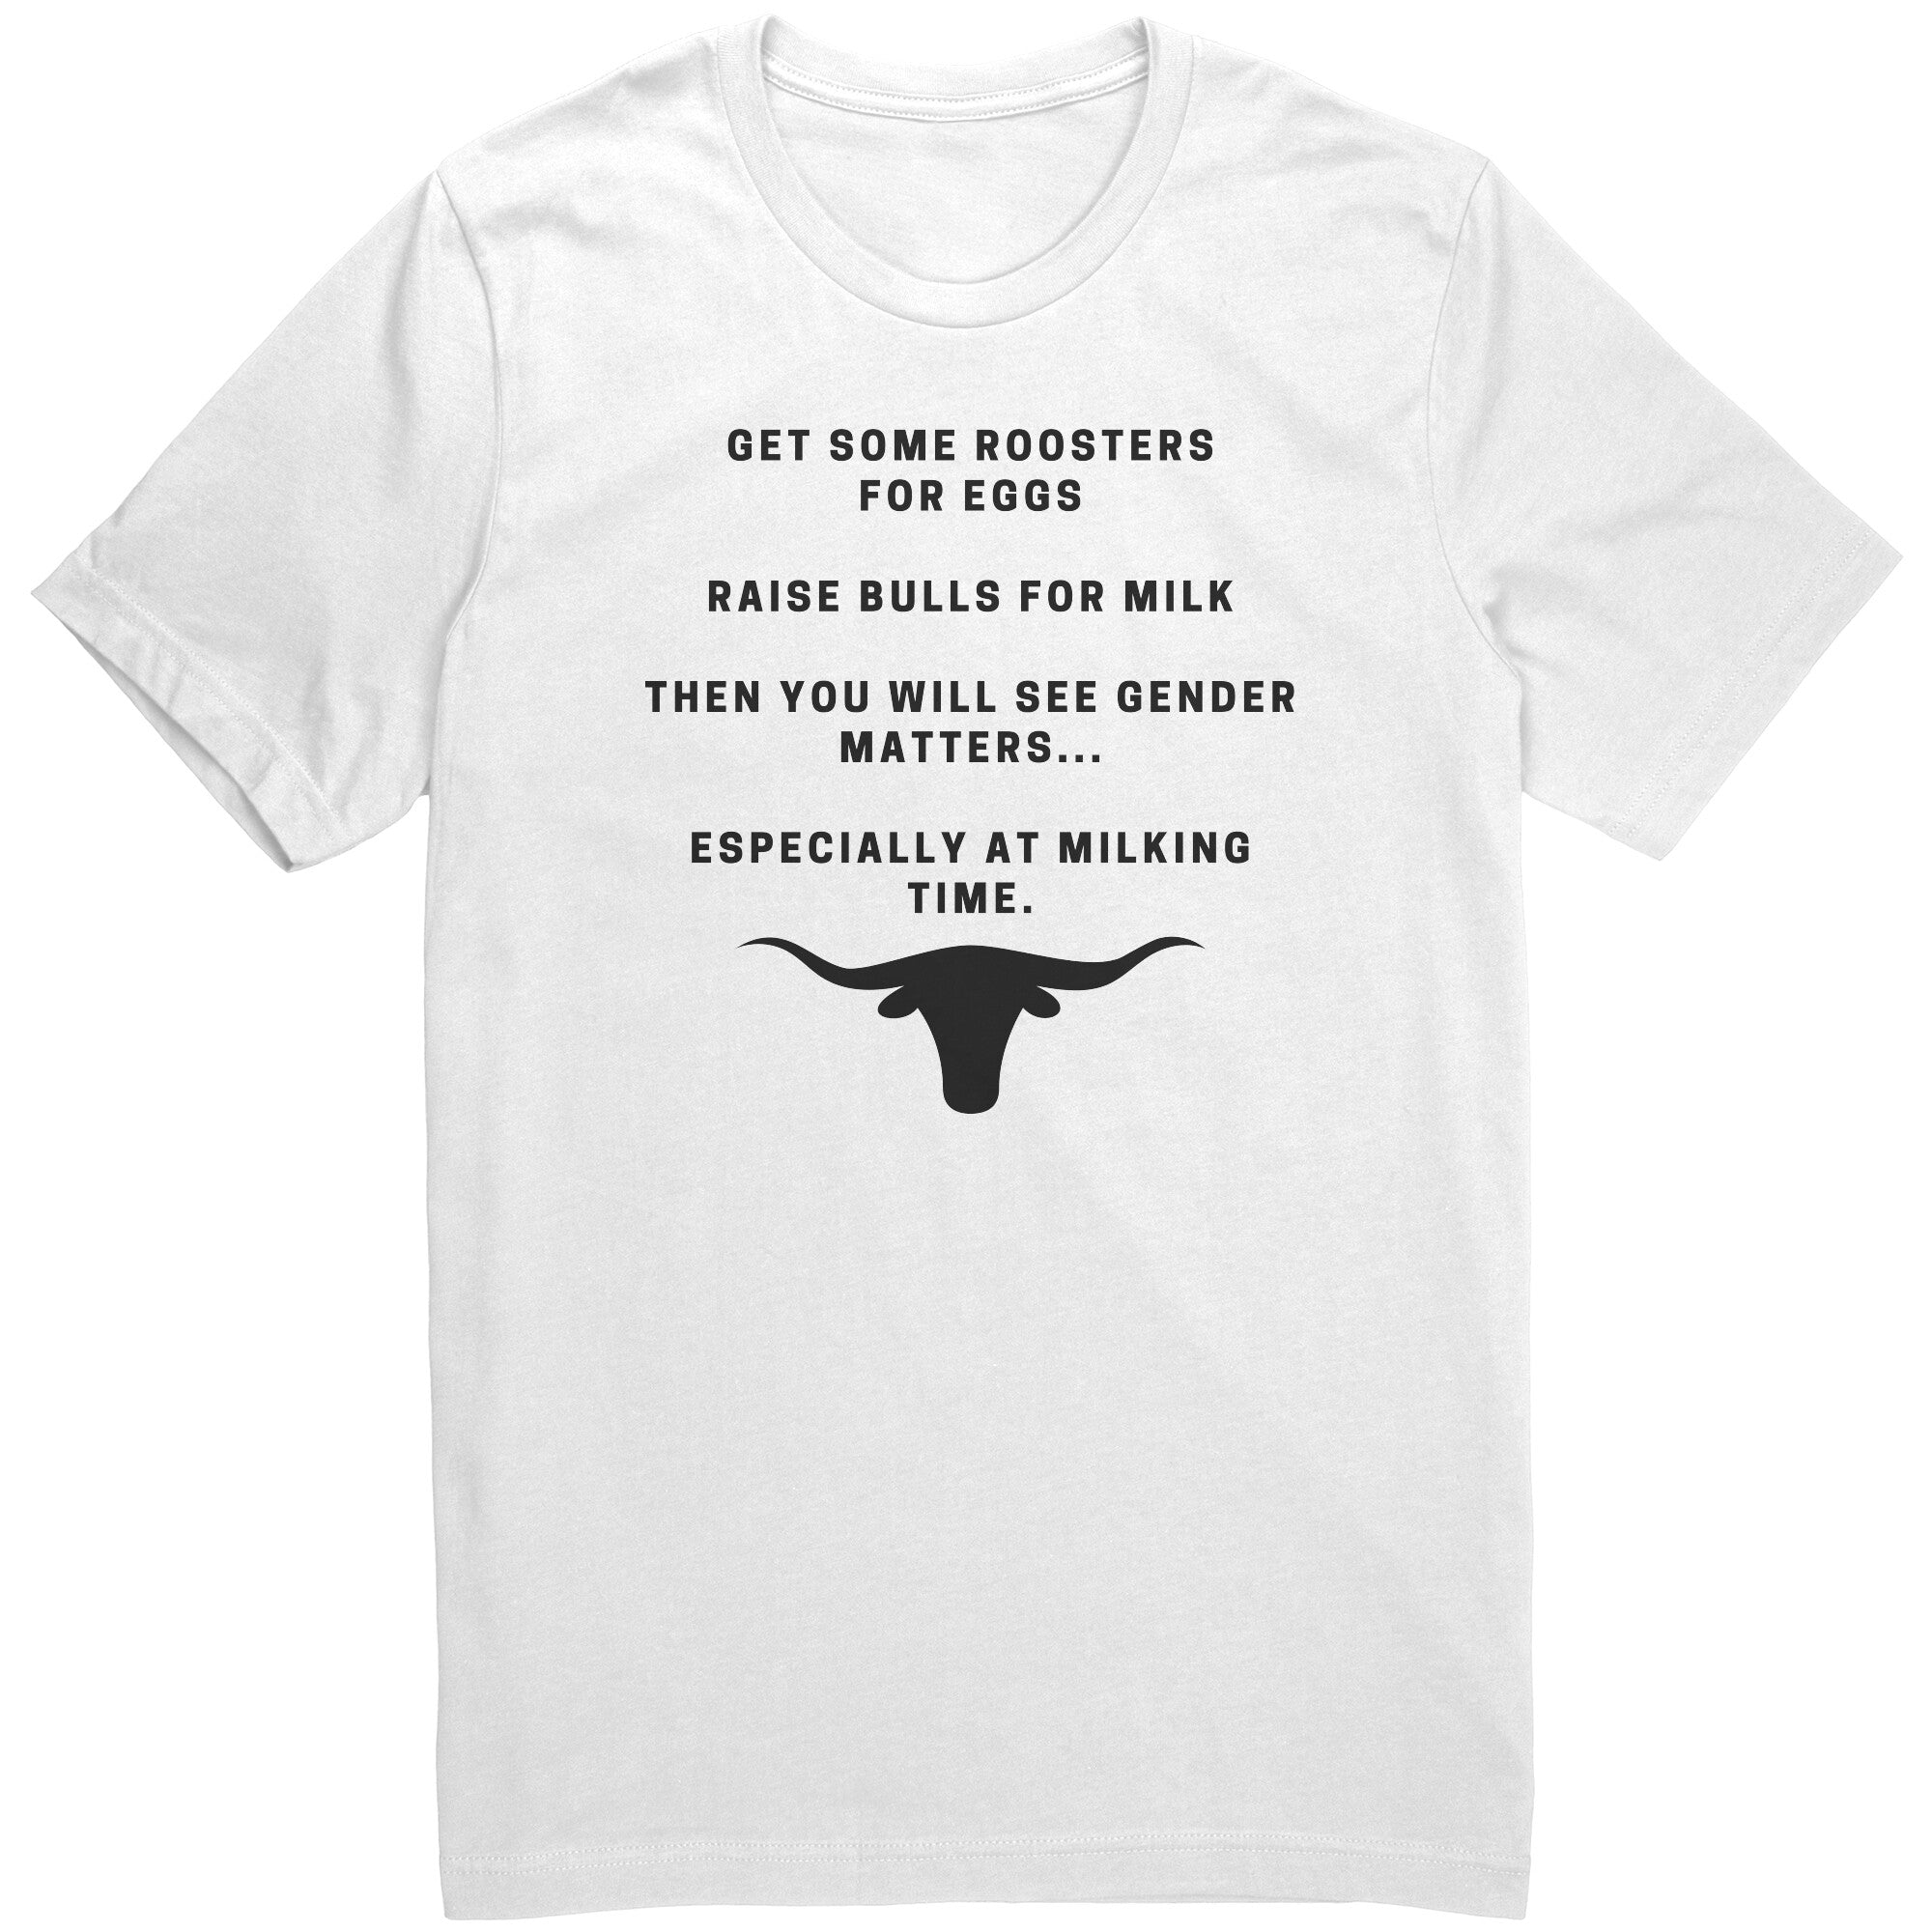 Funny Mens Shirt, Sarcastic Shirt For Men, Novelty Shirts, Offensive Shirt Milk A Bull Gender Matters Unisex Tee white